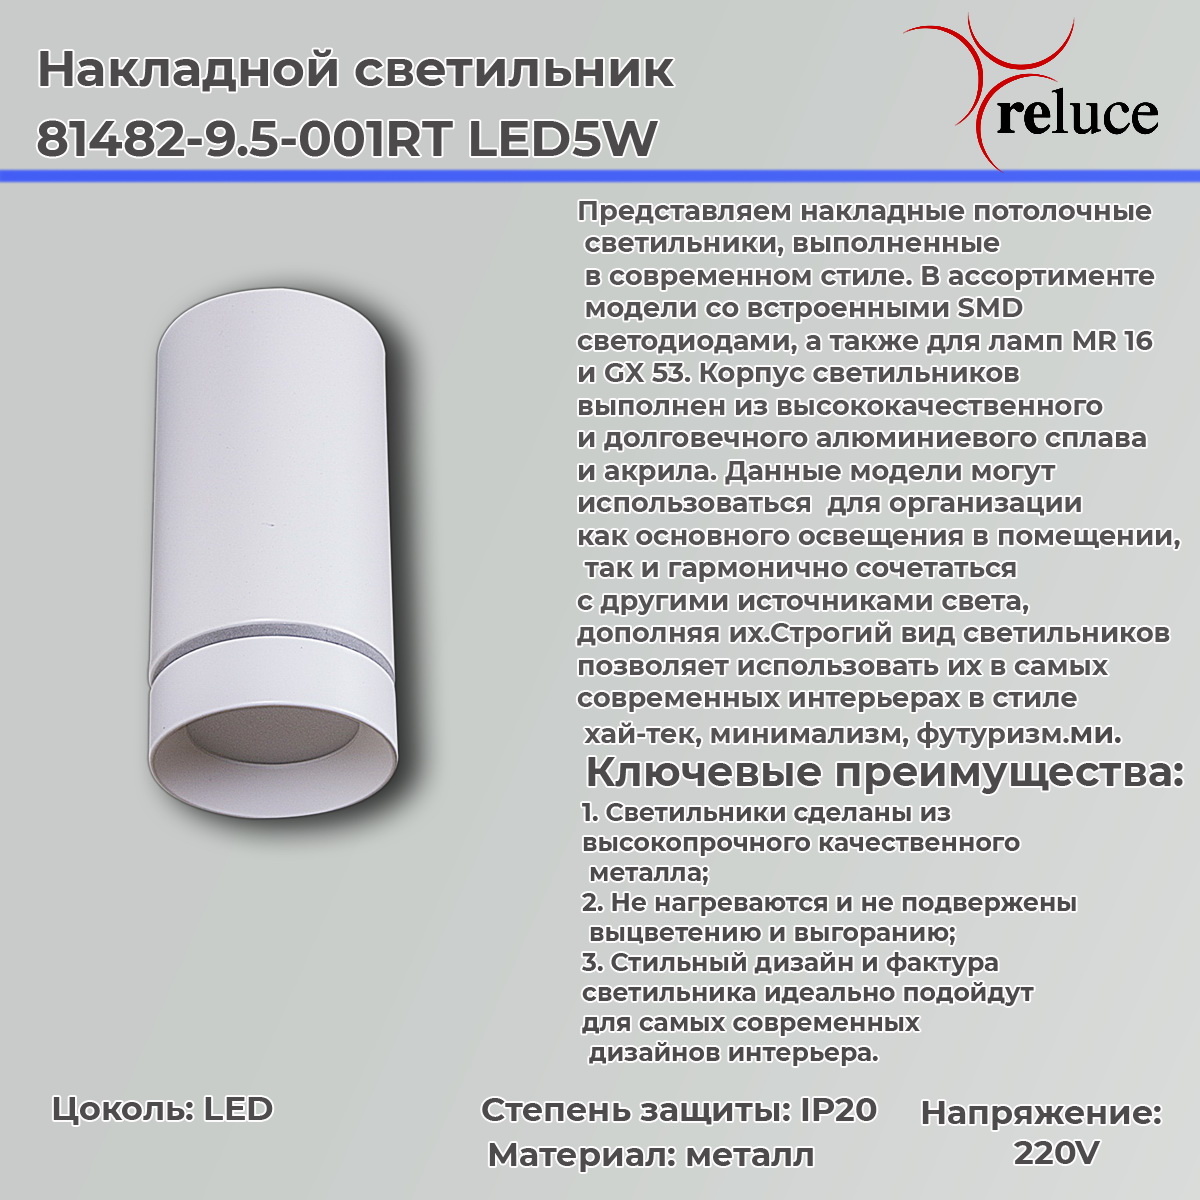 Накладной светильник Reluce 81482-9.5-001RT LED5W WT